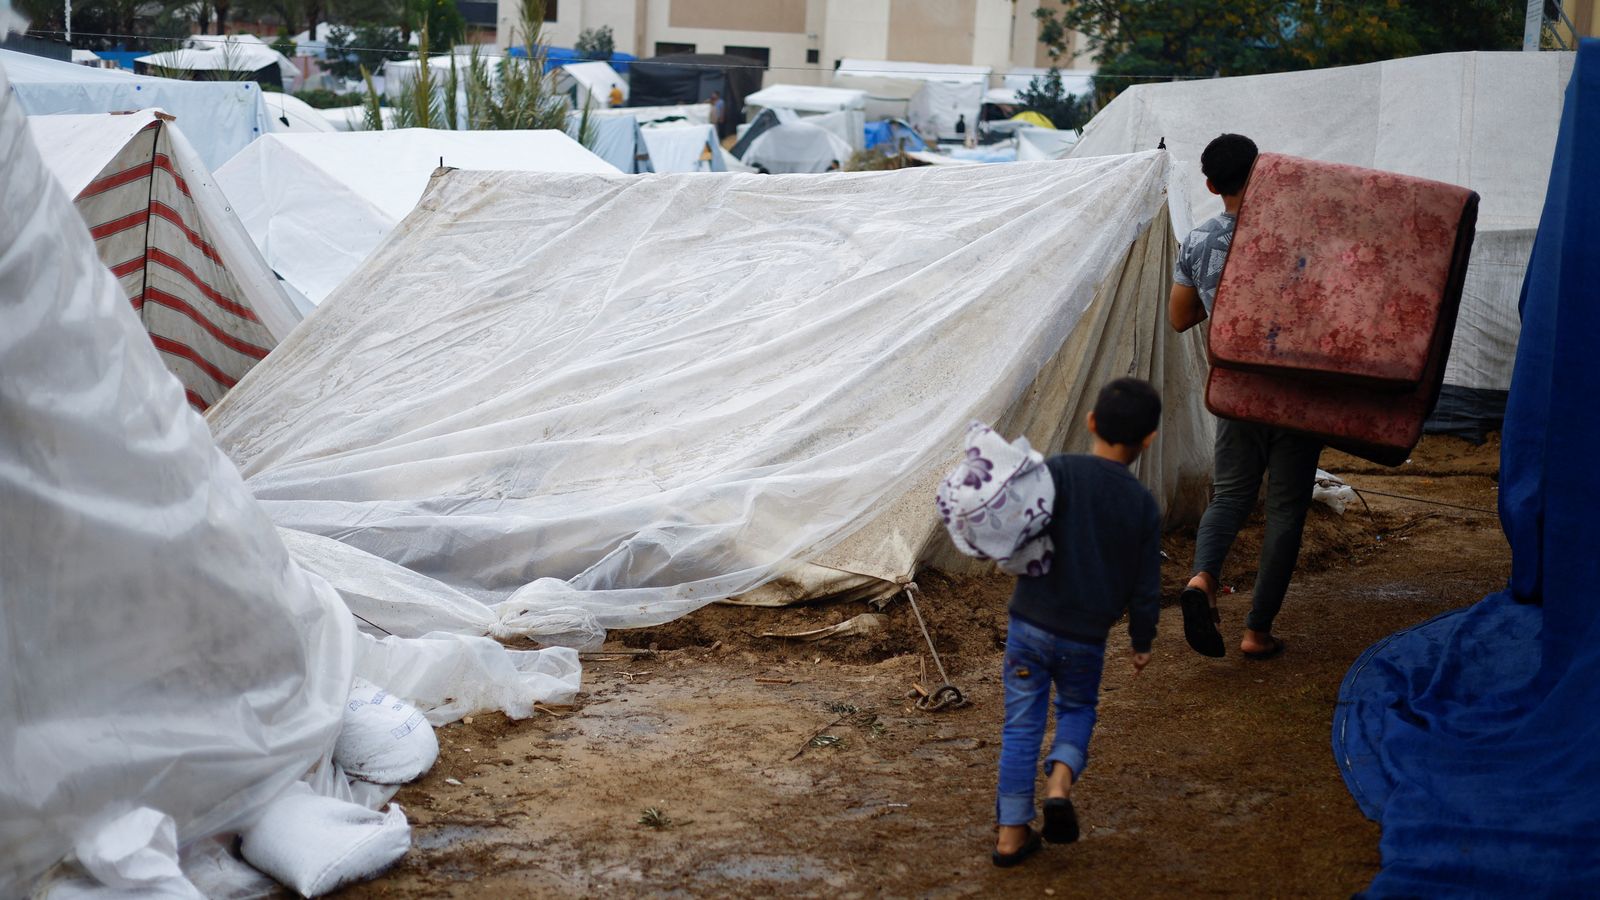 Gaza on verge of major disease outbreak, World Health Organisation warns